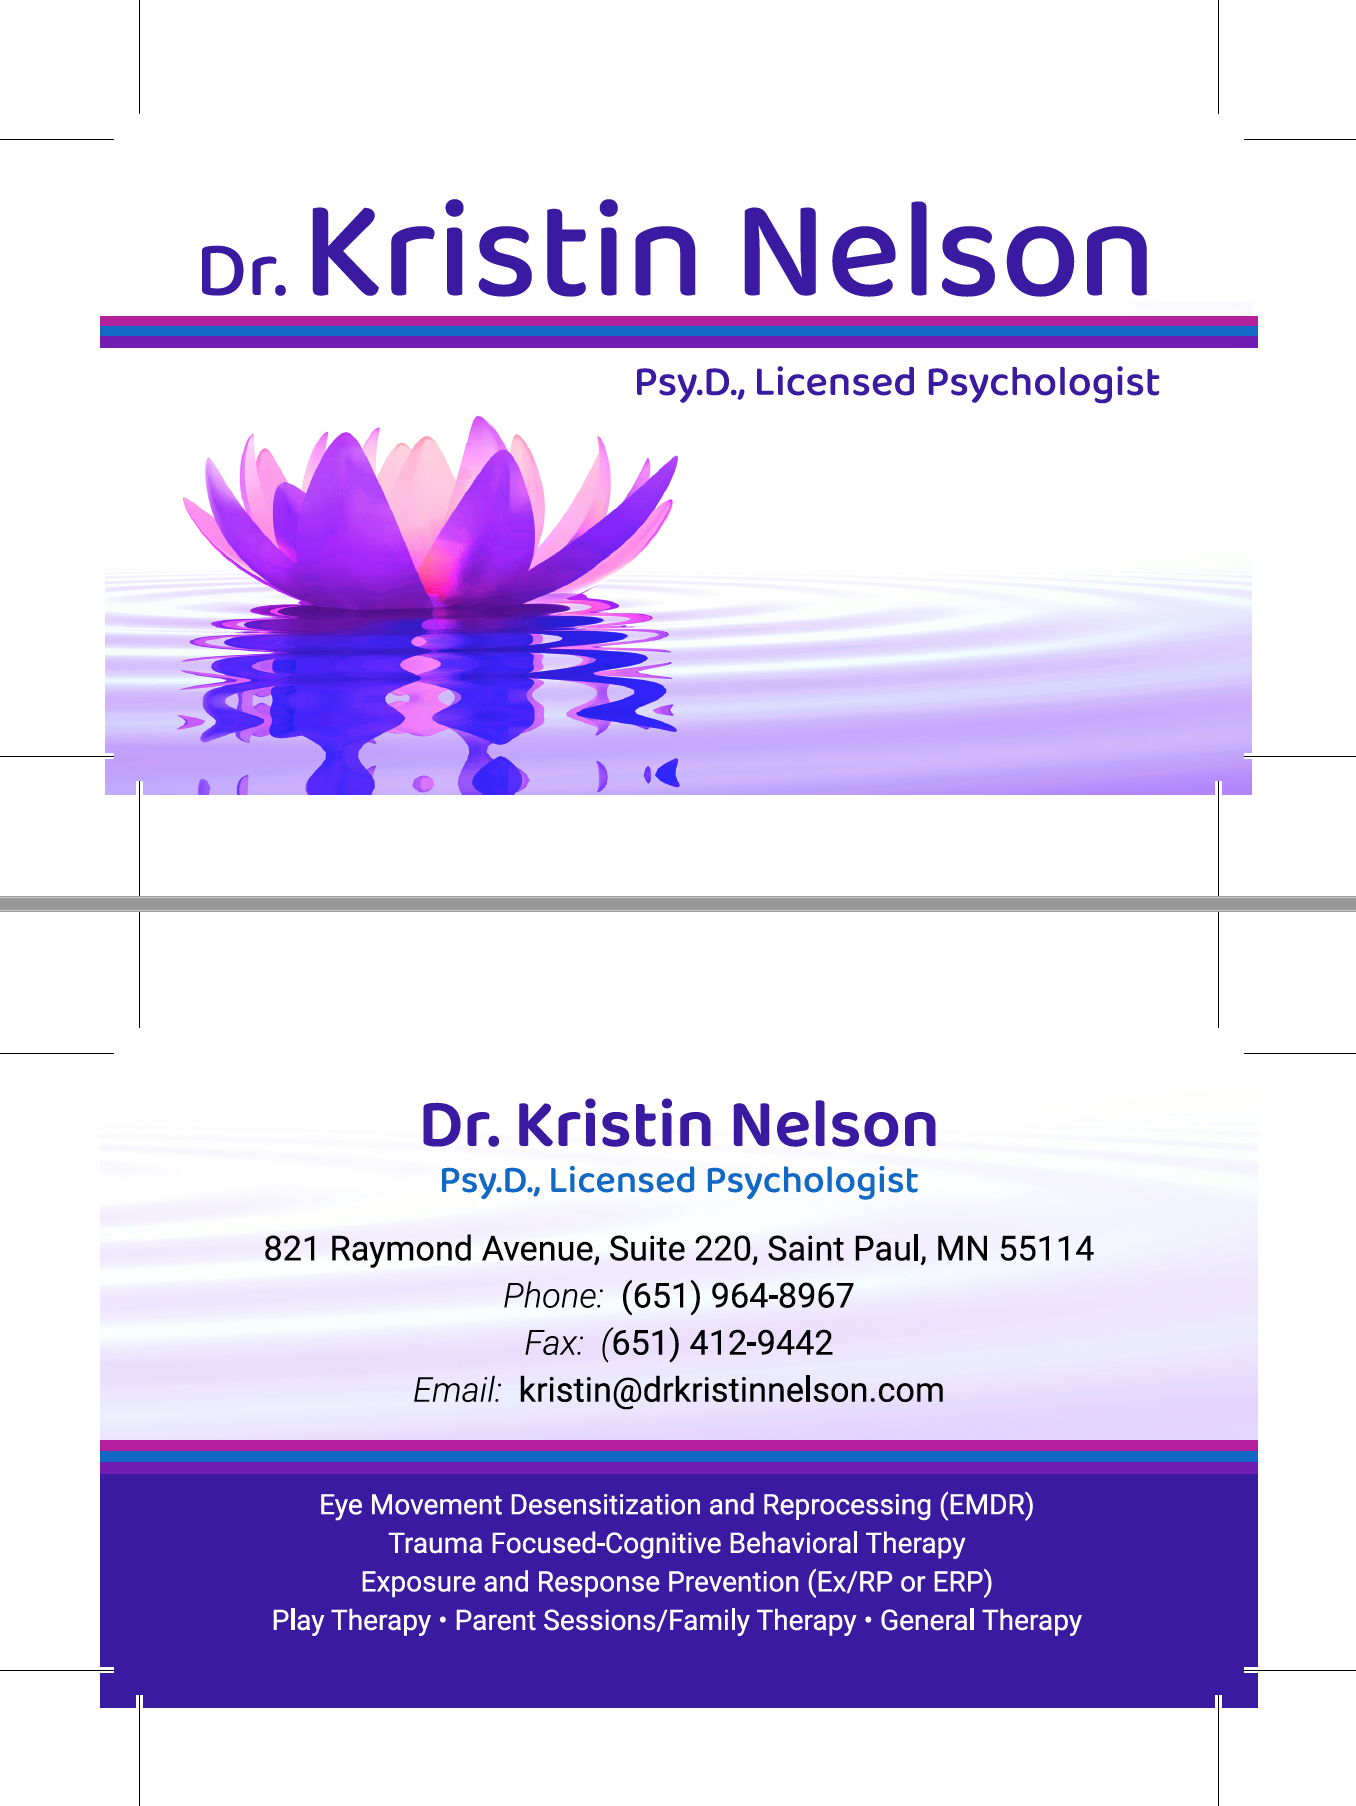 Dr. Kristin Nelson Business Card